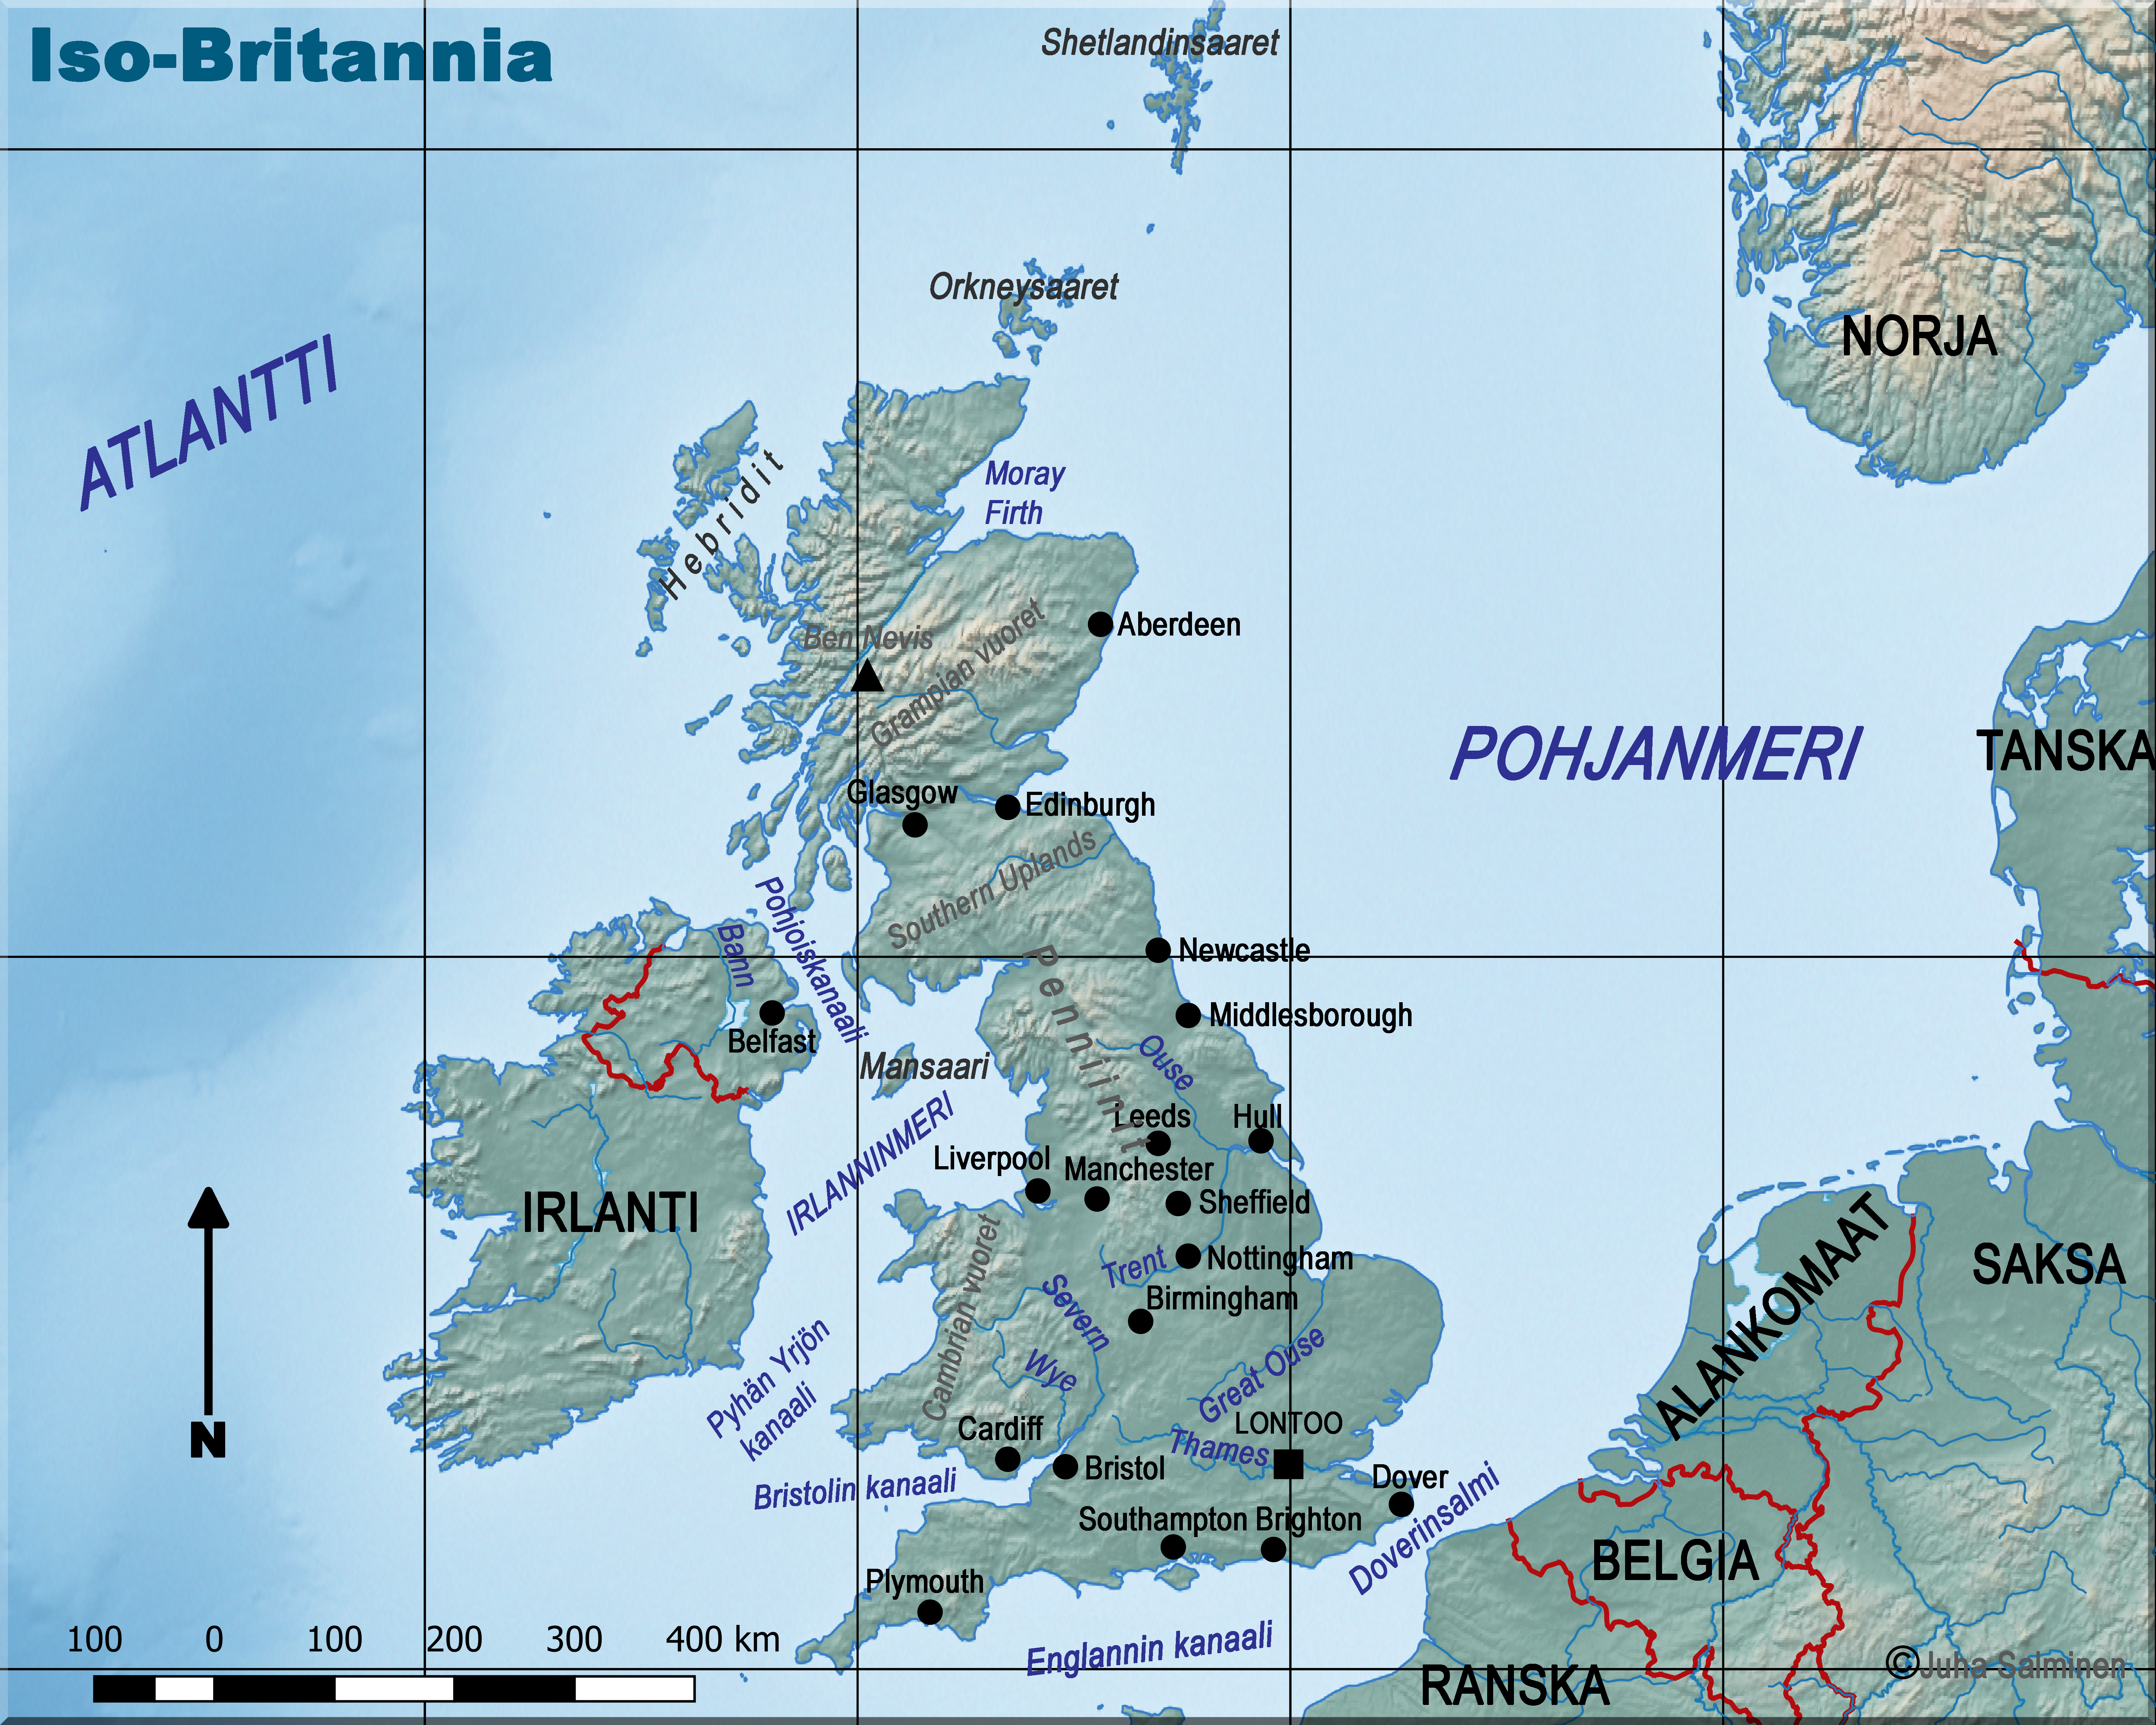 iso britannian kartta Iso Britannian Kartta iso britannian kartta